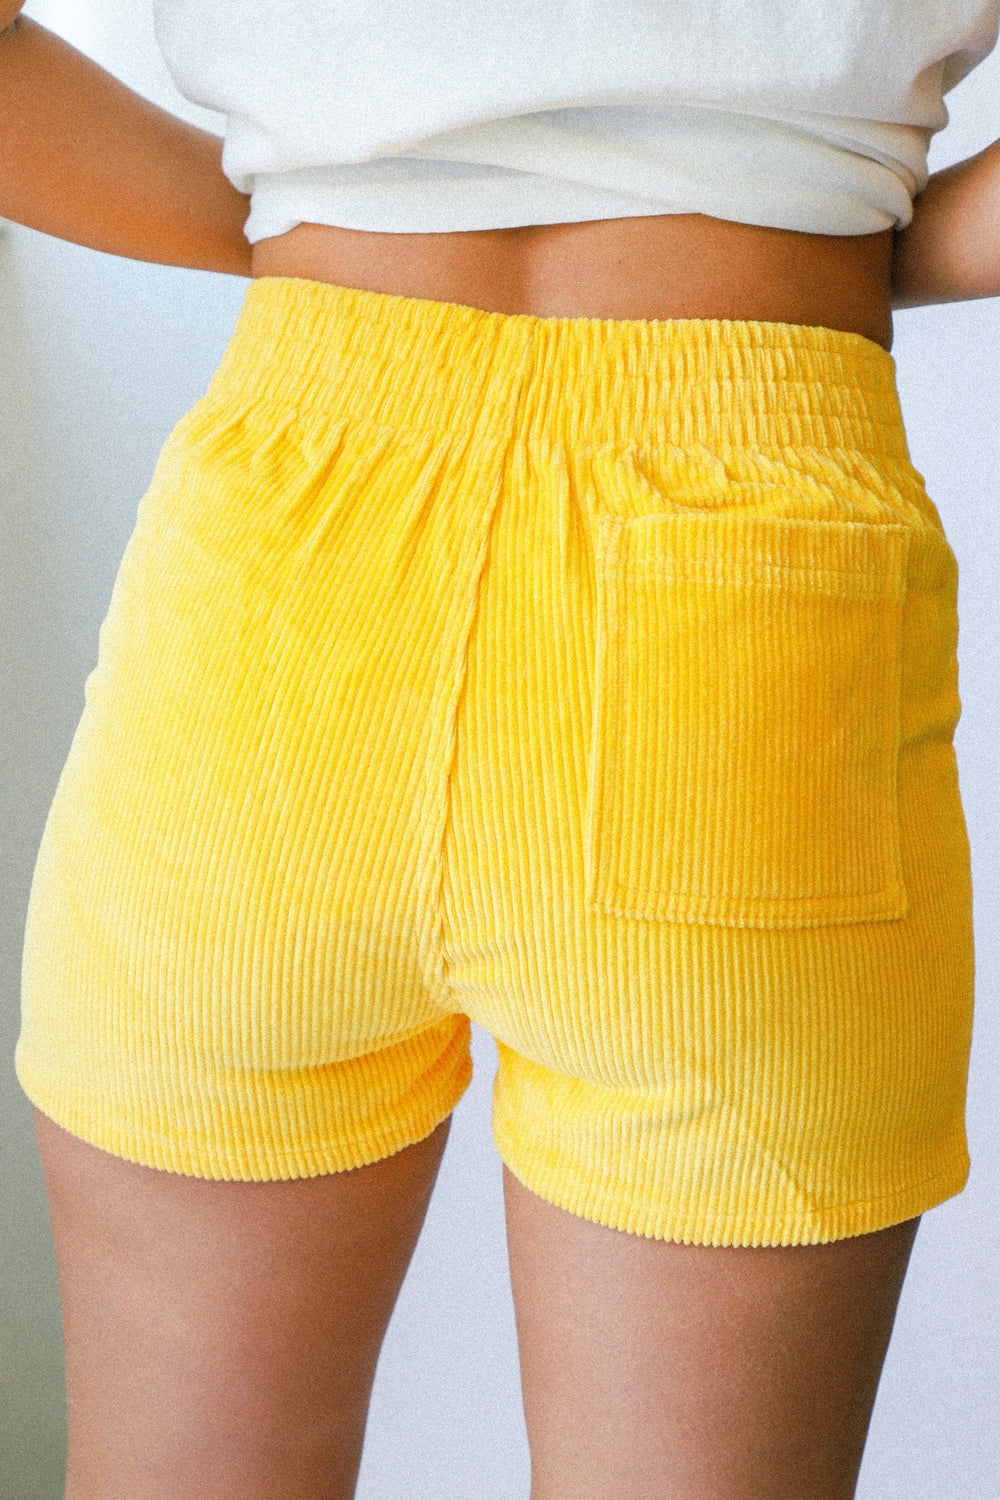 Hammies Shorts - Yellow